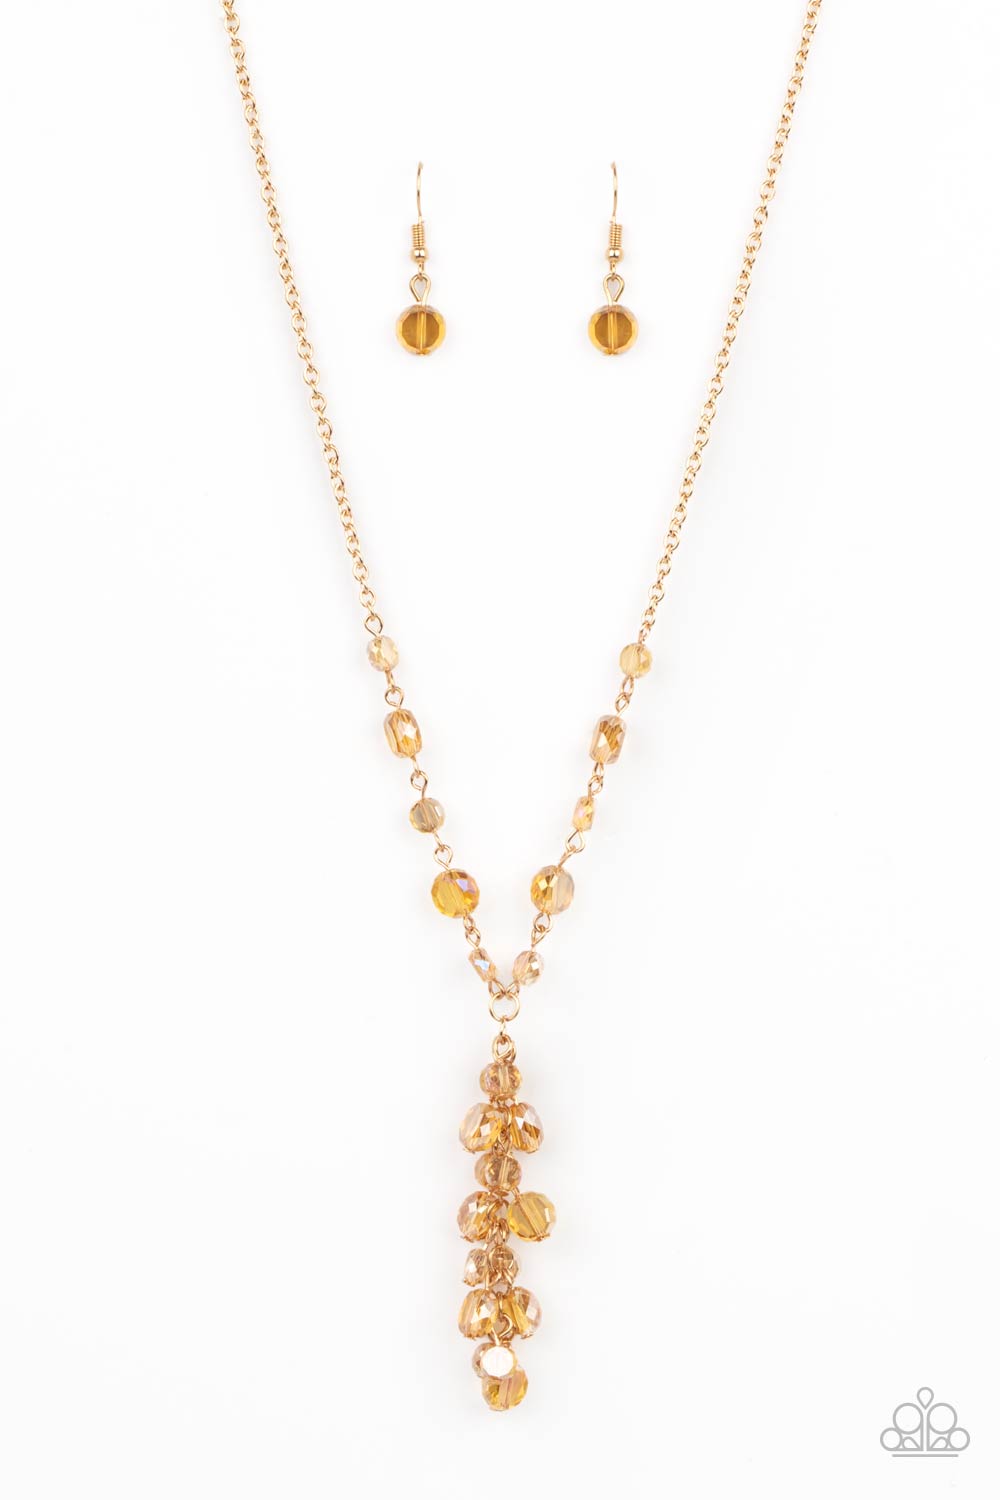 Cosmic Charisma - Gold Necklace freeshipping - JewLz4u Gemstone Gallery